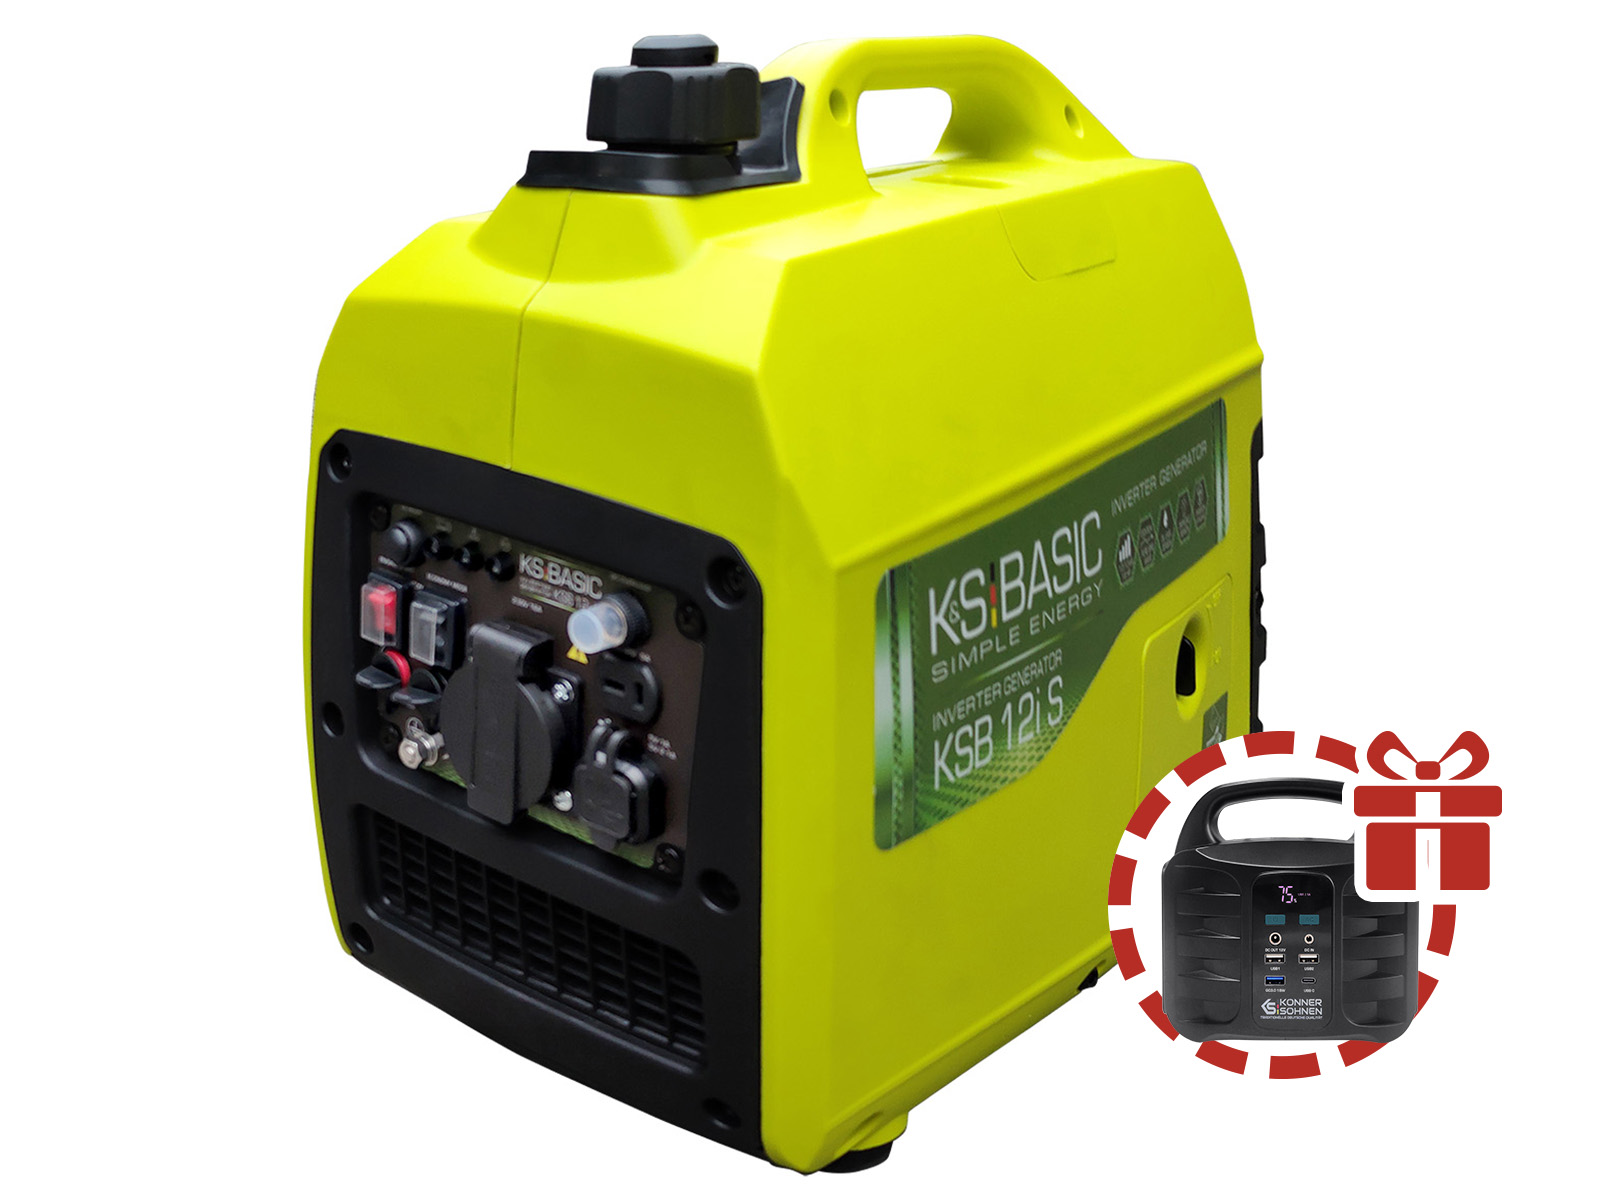 Inverter generator KSB 12i S